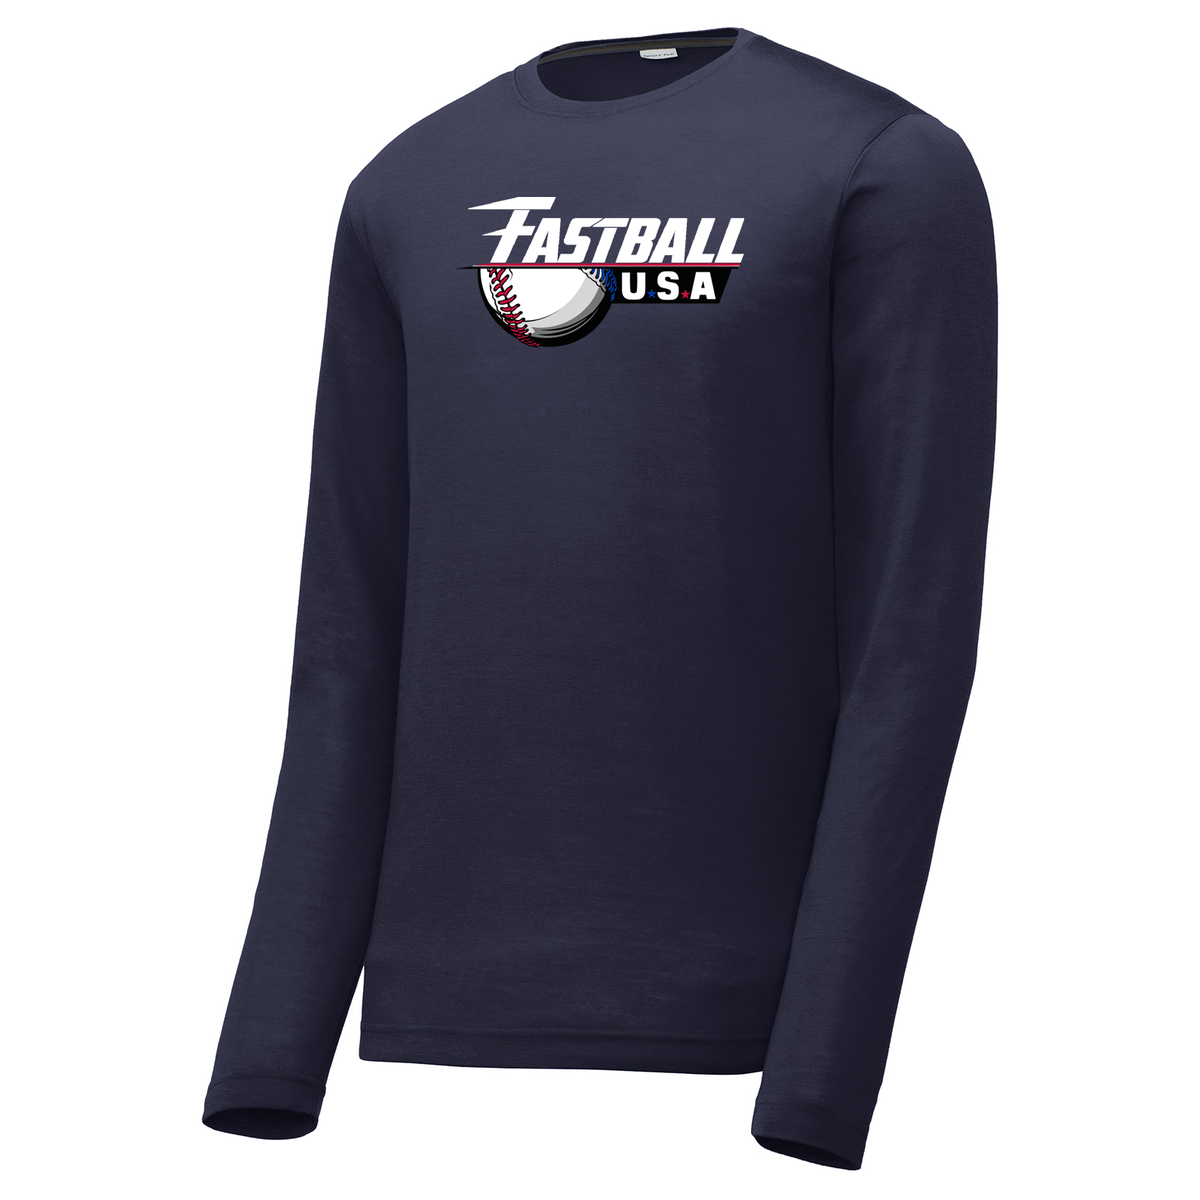 Fastball USA Academy Baseball Long Sleeve CottonTouch Performance Shirt